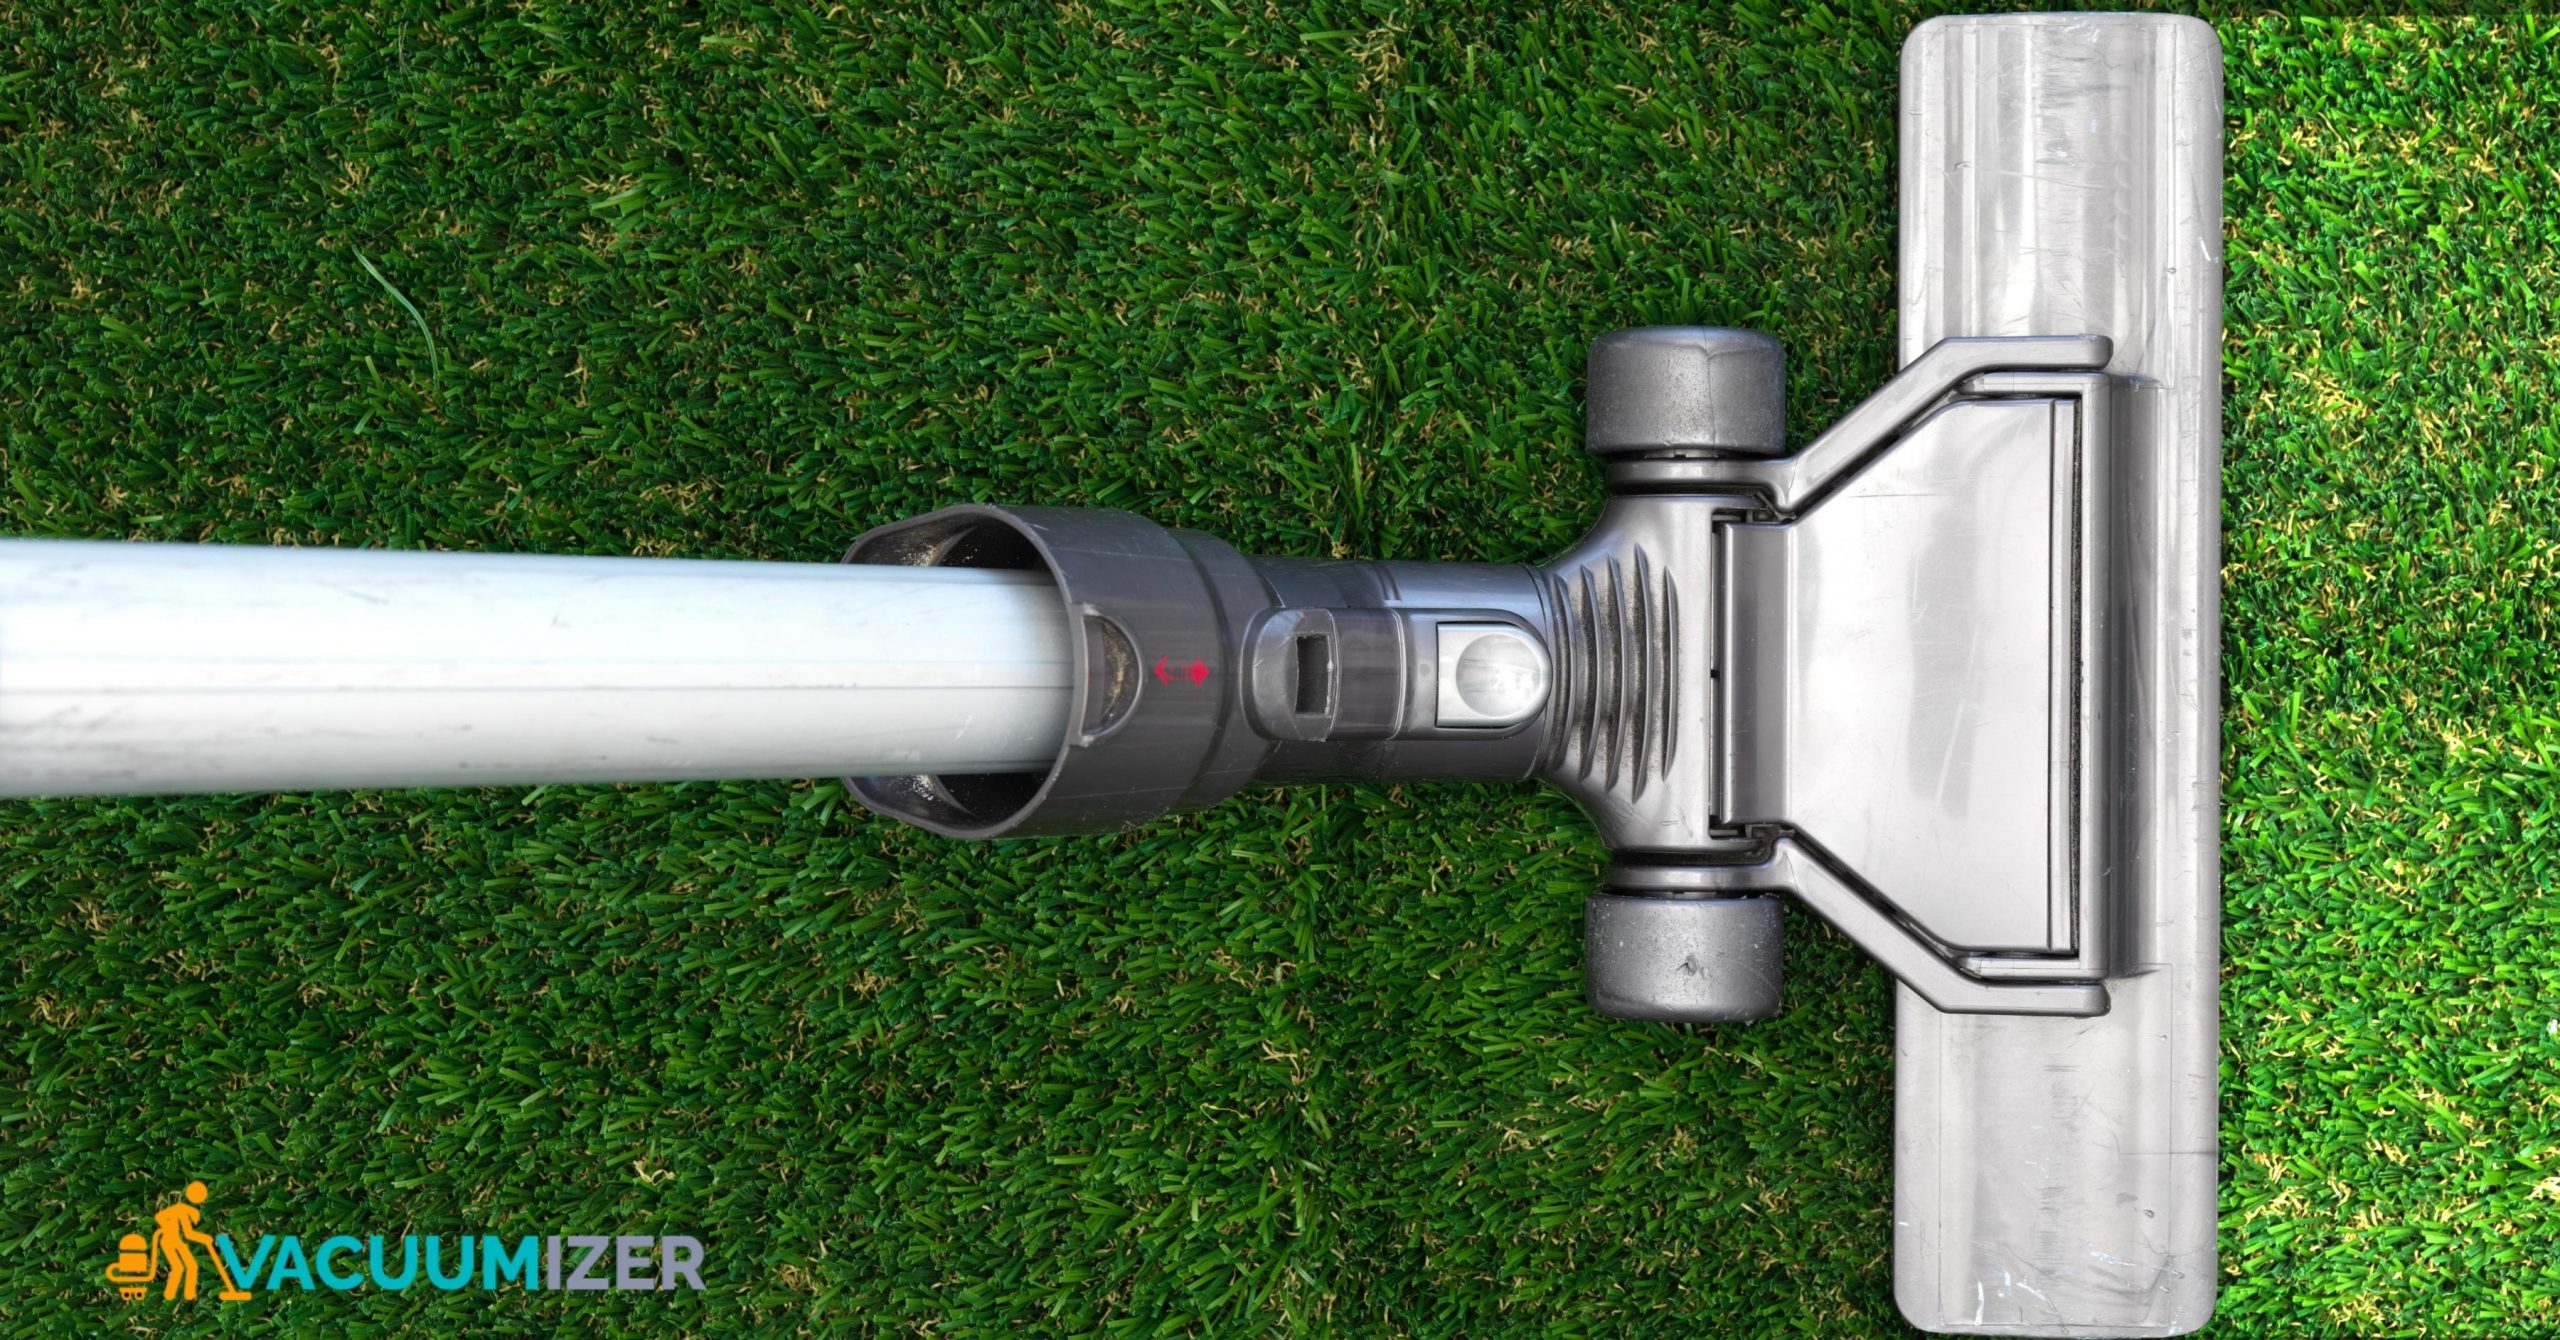 Can You Vacuum Artificial Grass